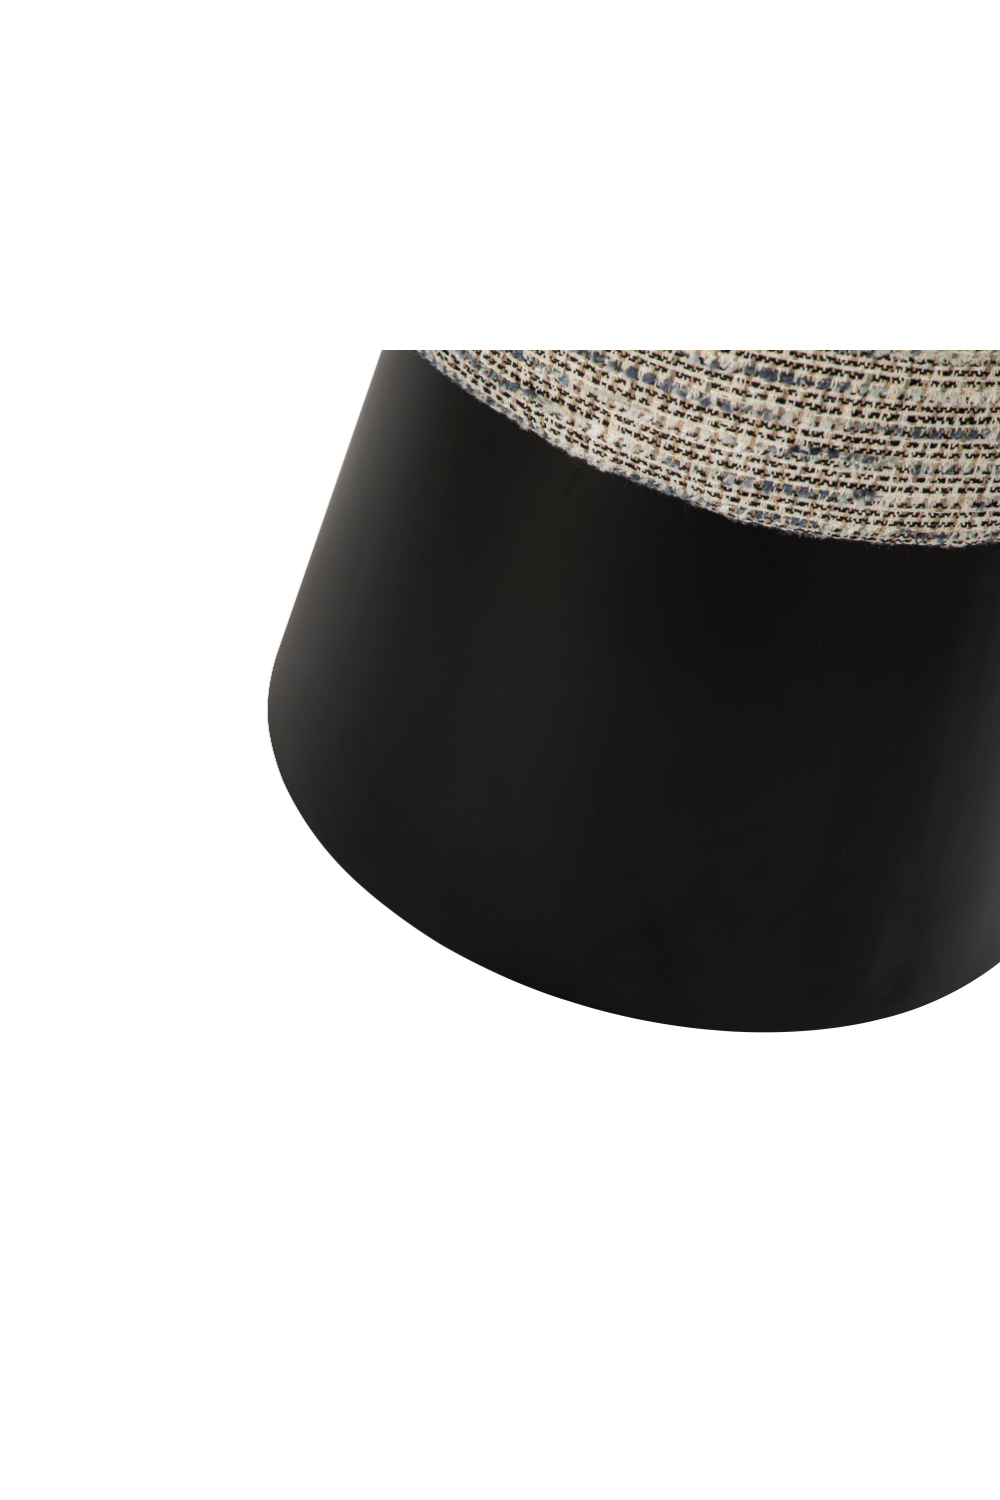 Modern Upholstered Stool | Liang & Eimil Cyrus | Oroa.com